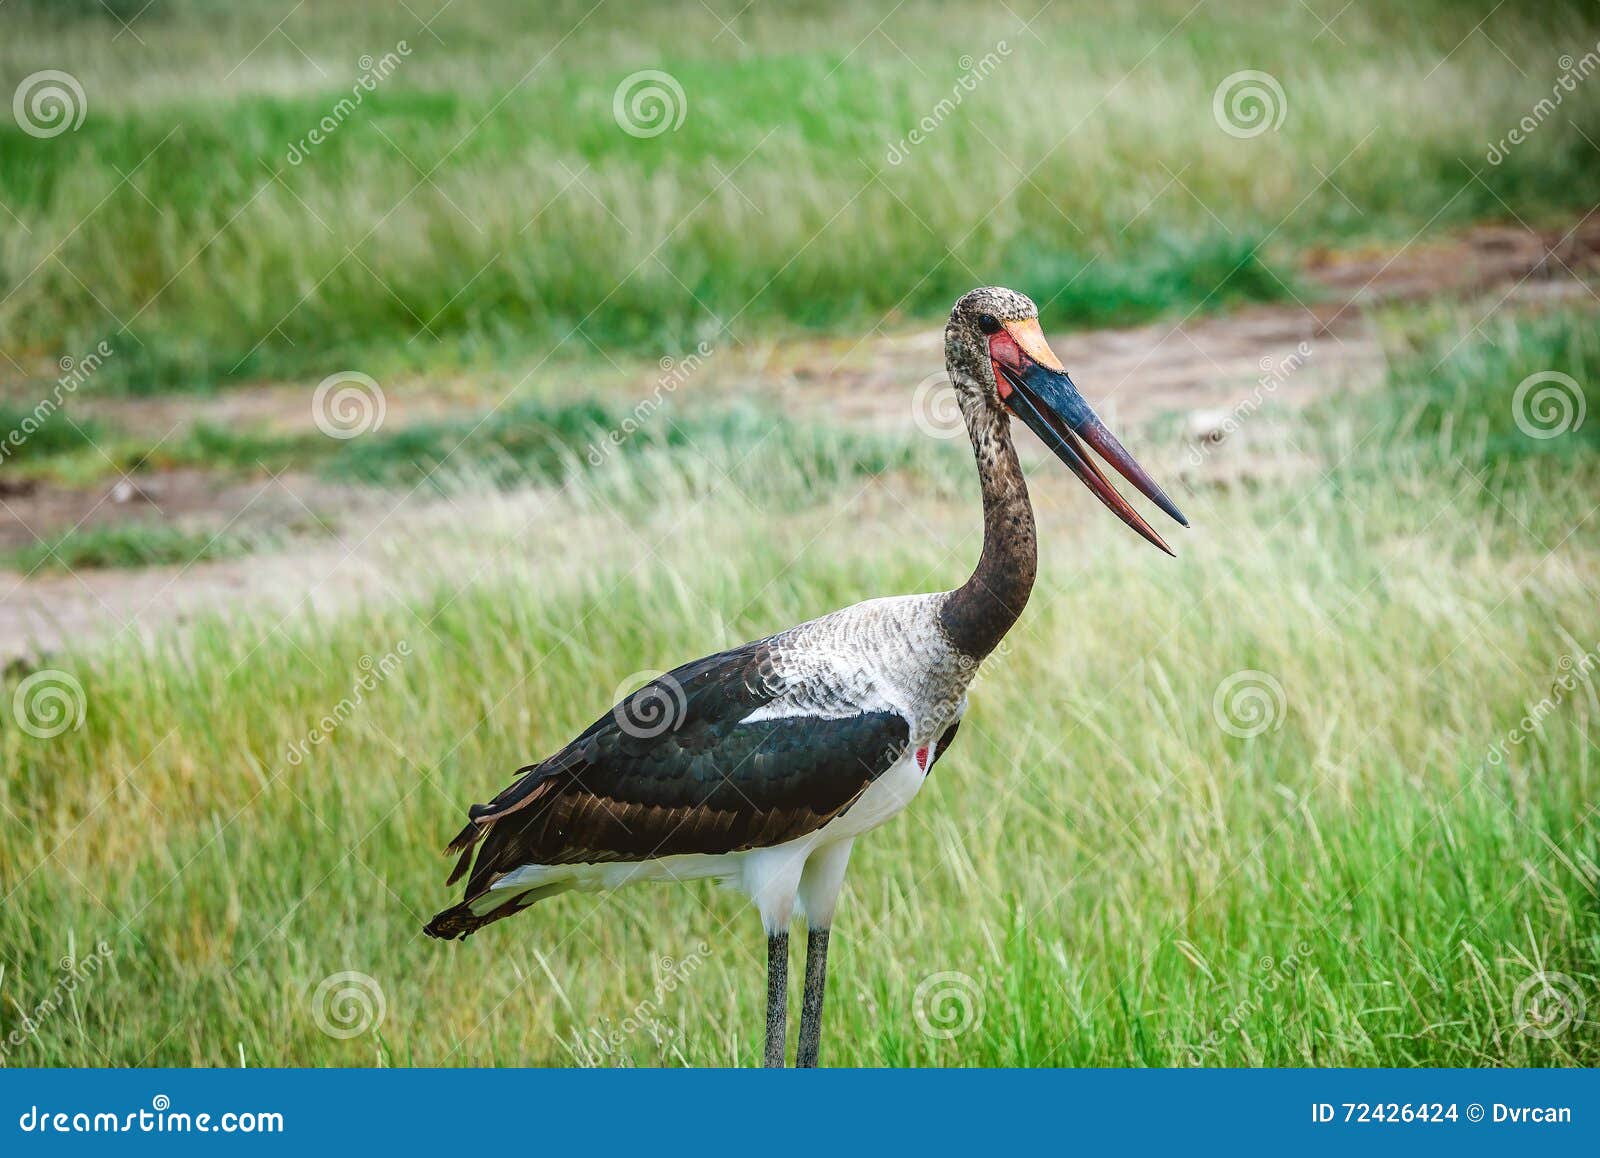 saddle- billed stork bird in kenya, africa